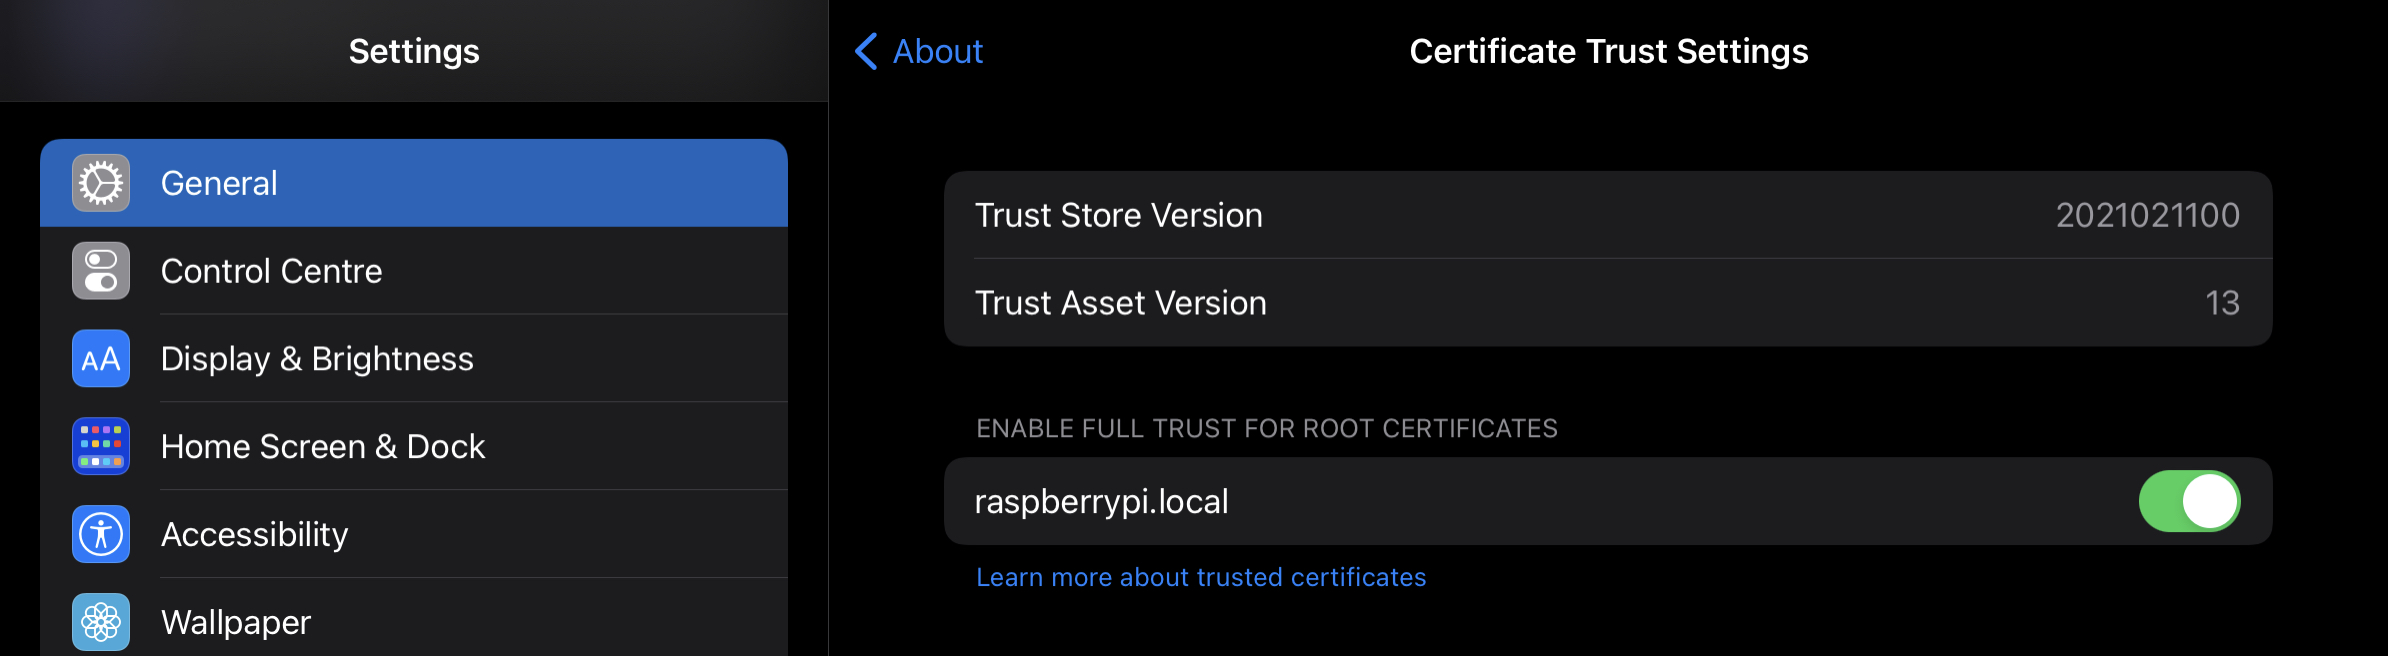 certificate trust settings